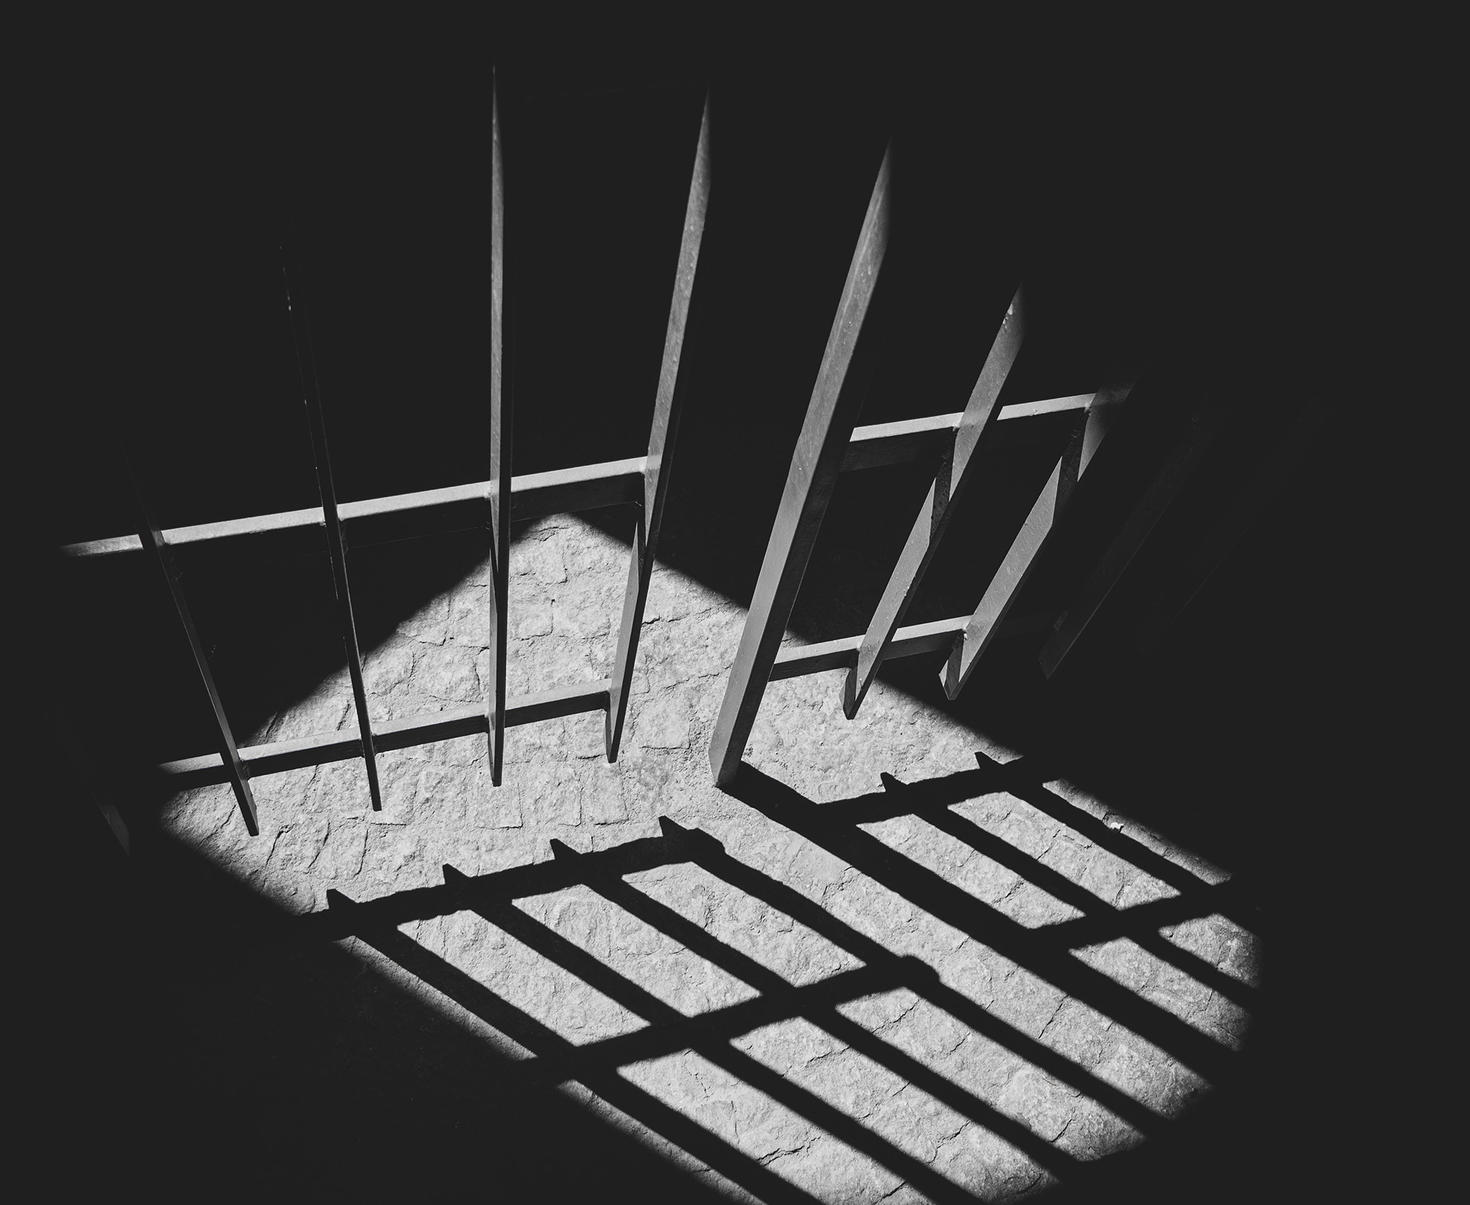 Prison bars casting a shadow